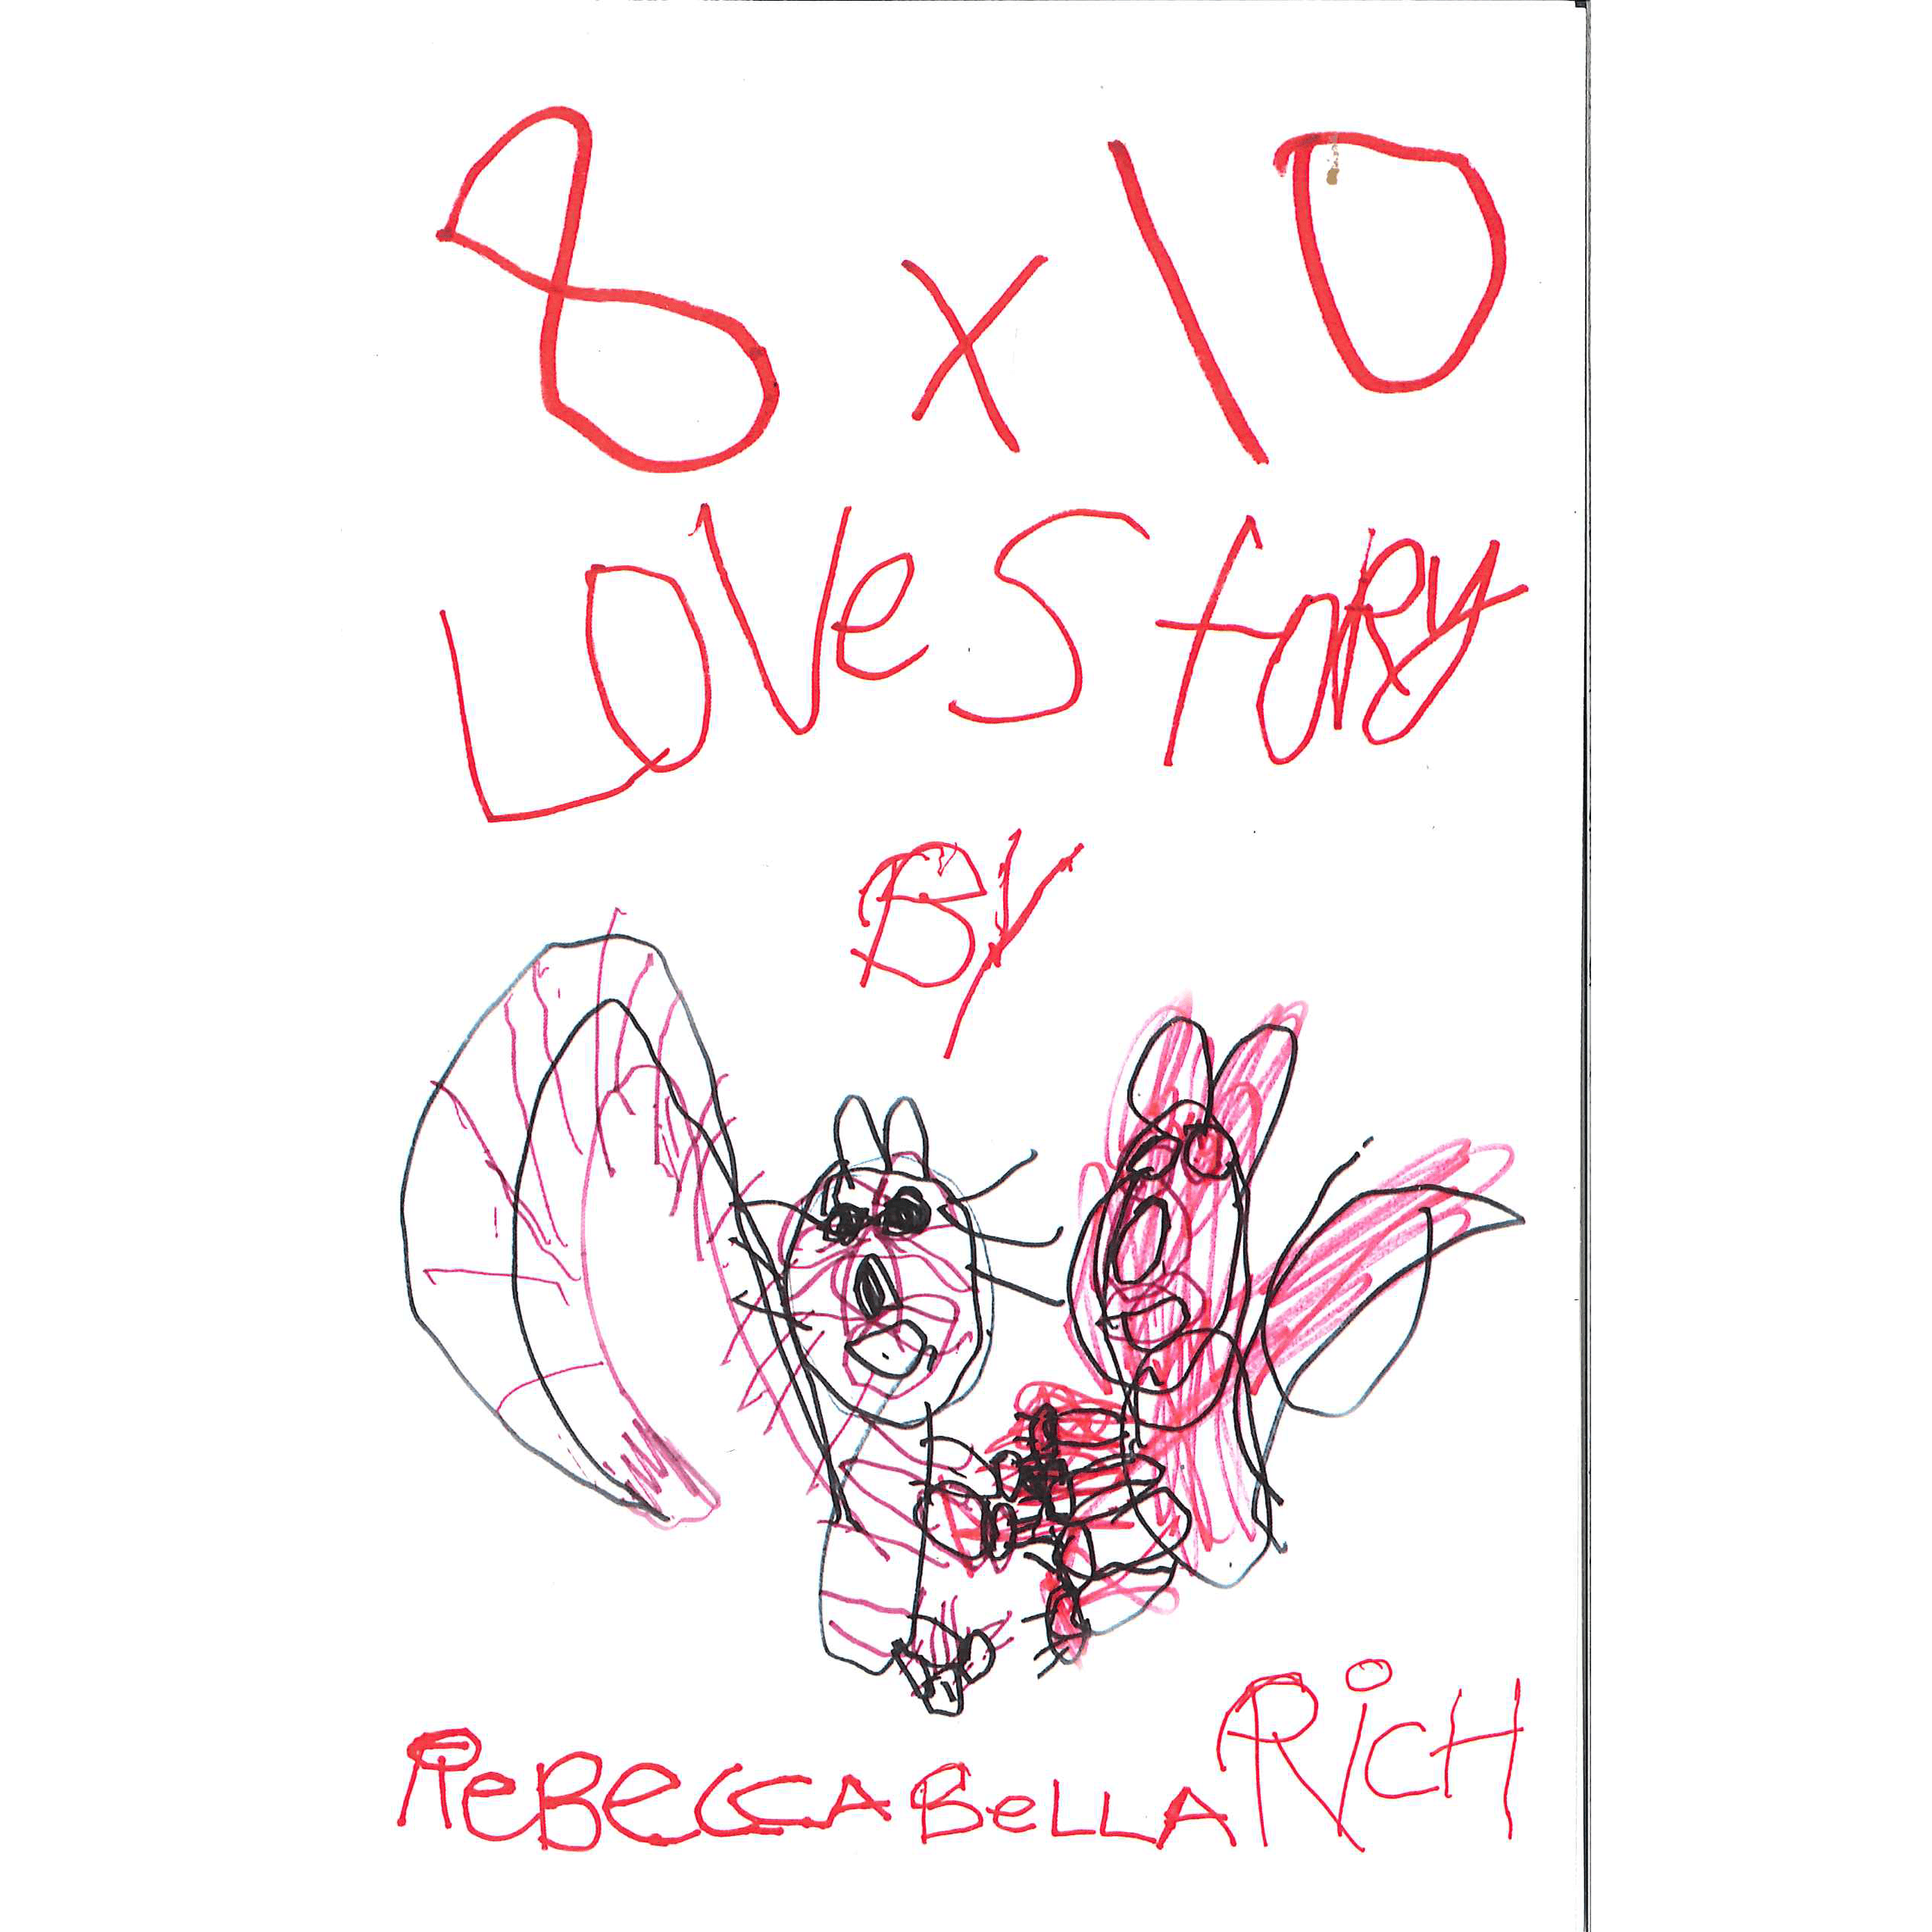 8 x 10 Love Story by Rebecca Bella Rich